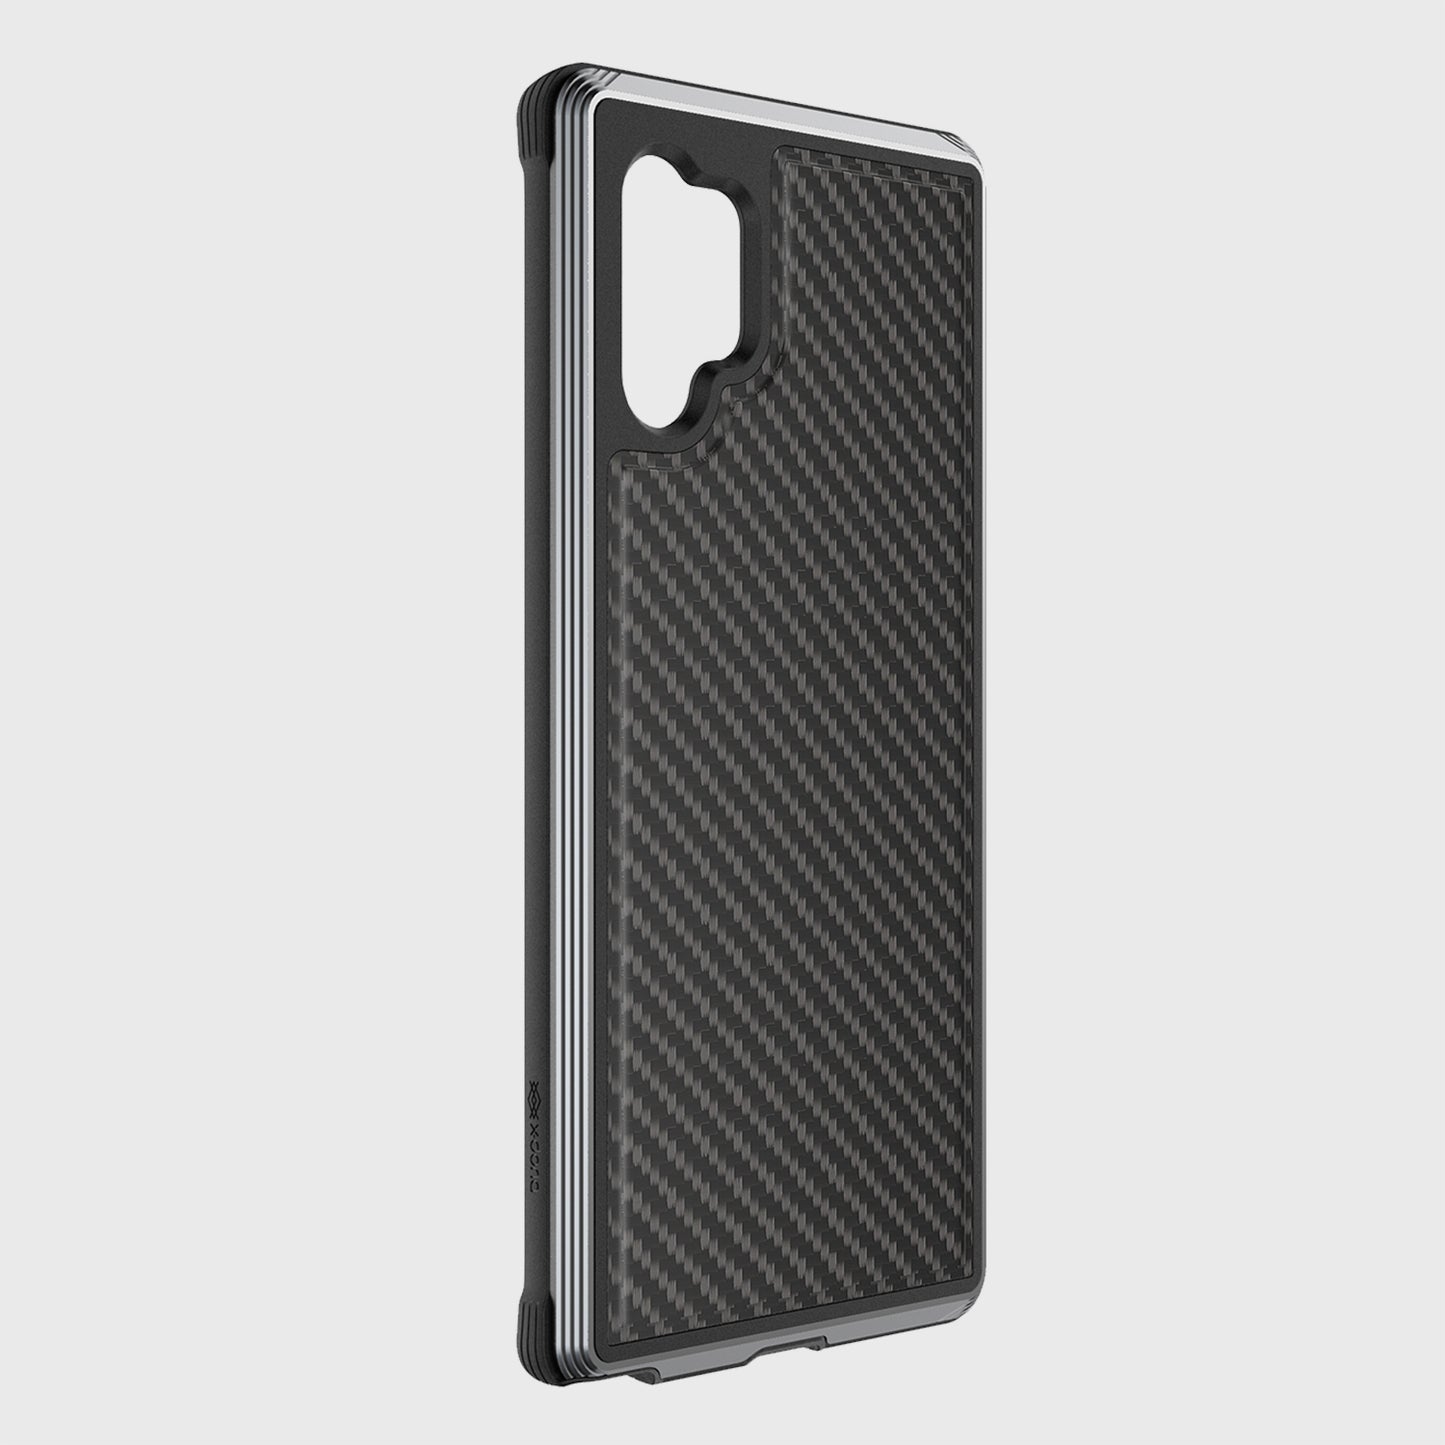 Samsung Galaxy Note 10+ Case - Lux Black Carbon